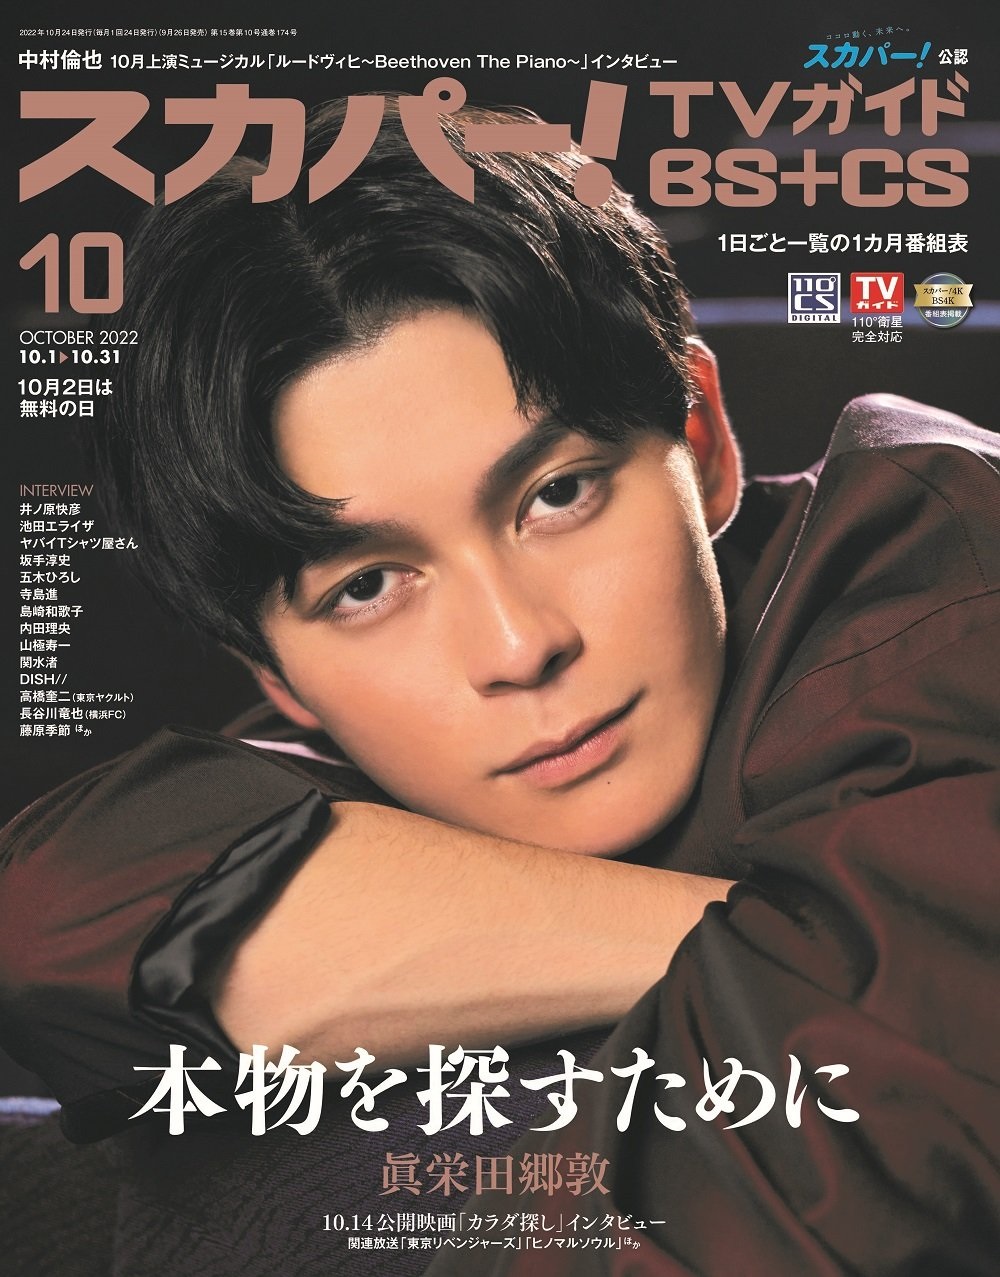 SKY PerfecTV！TV Guide BS＋CS 10月號/2022